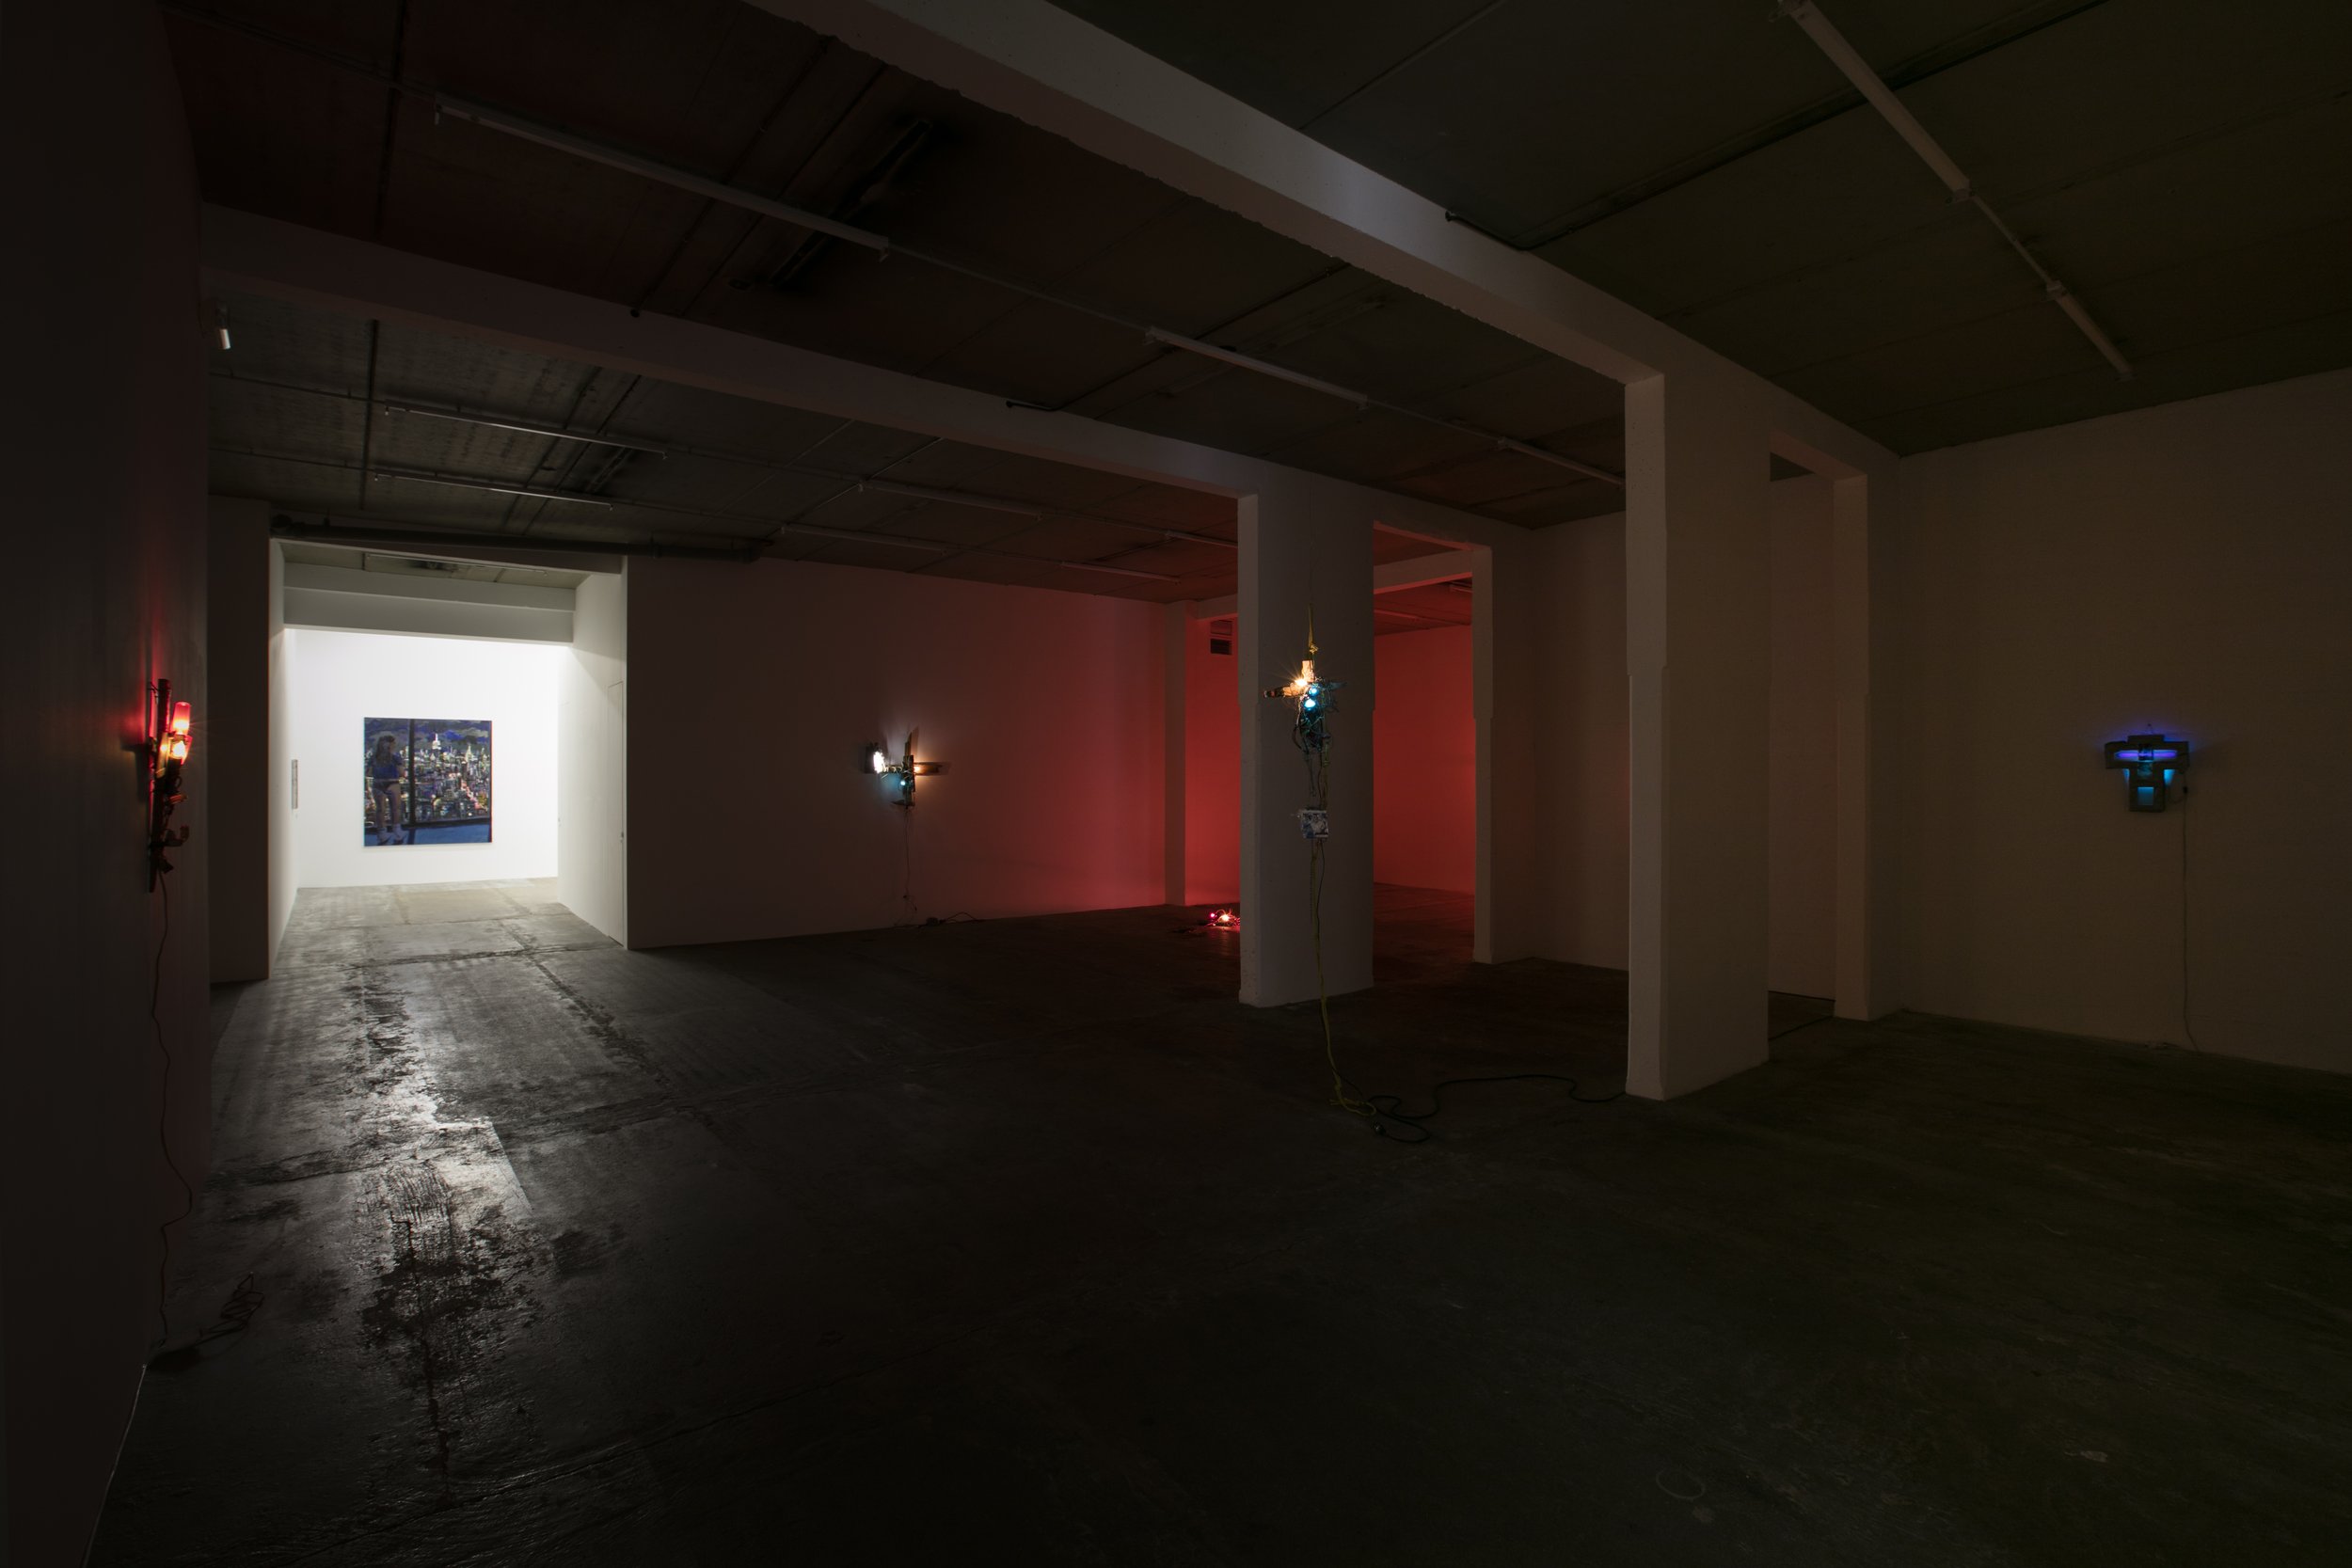 Universe, Galerie Laurent Godin, Paris, 2018